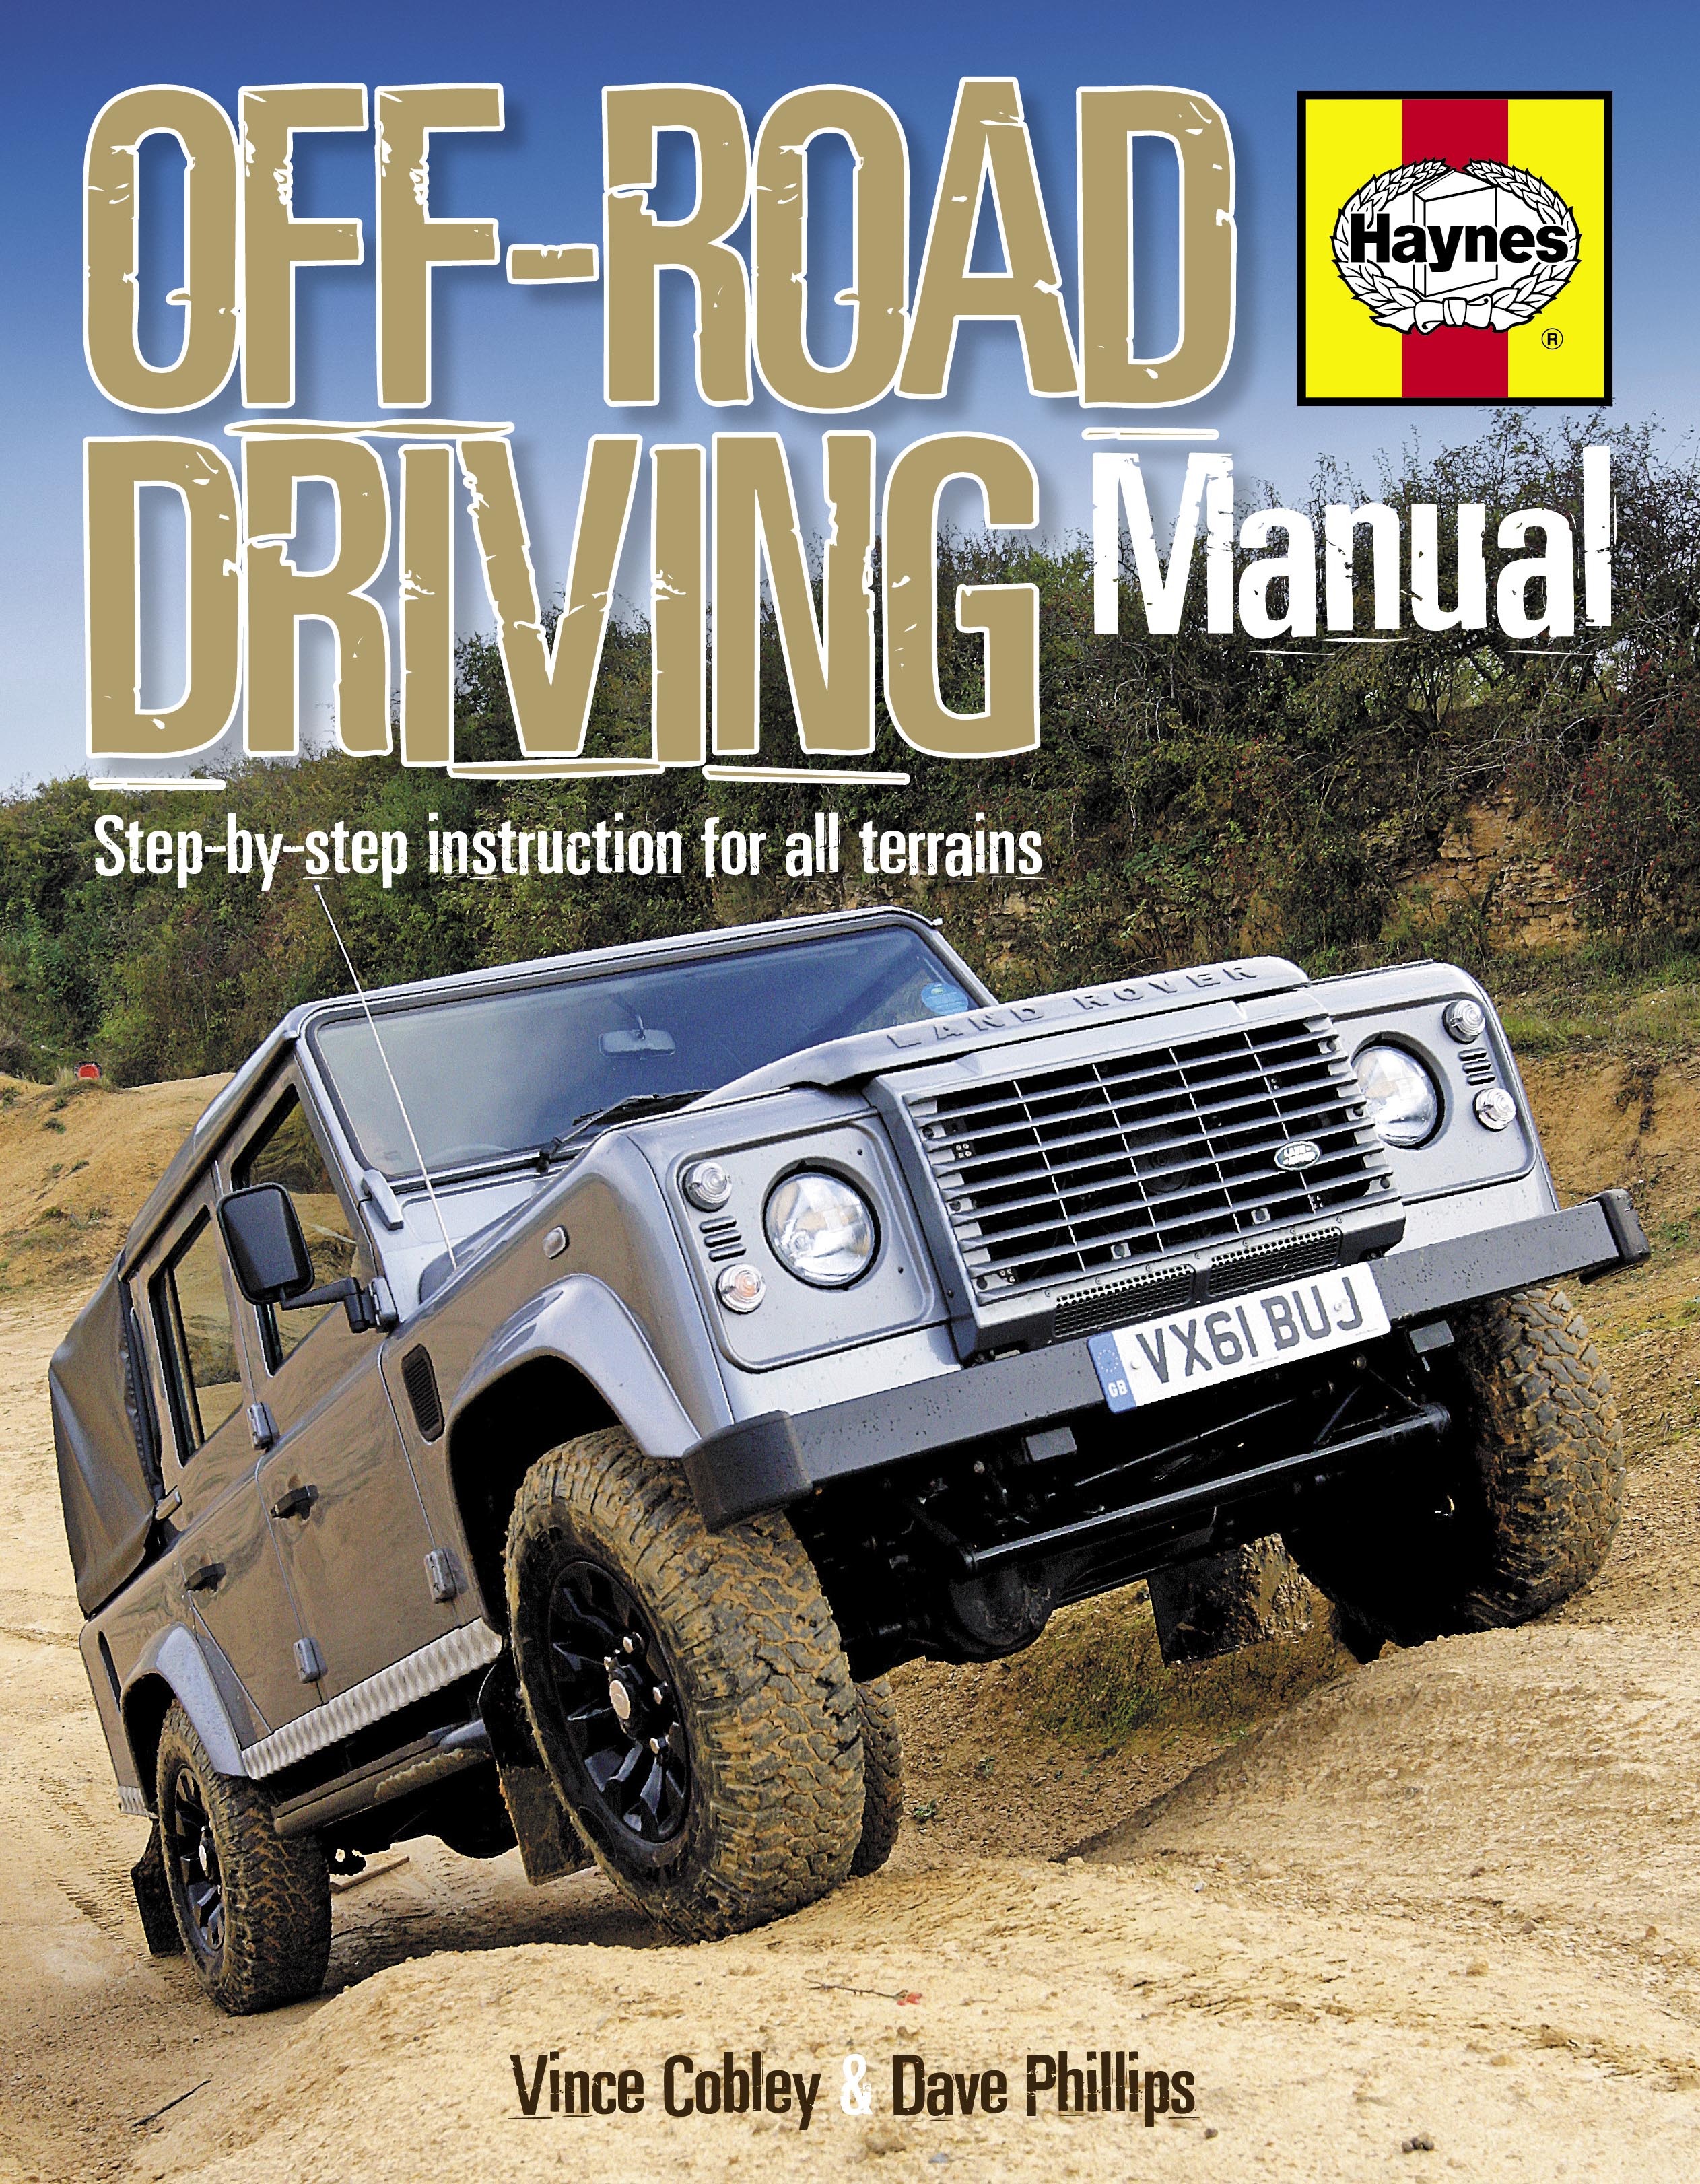 Step инструкция. Мануал драйв. Винс Филлипс. Журнал off-Road-Drive 2008. Off Road Drive журнал.